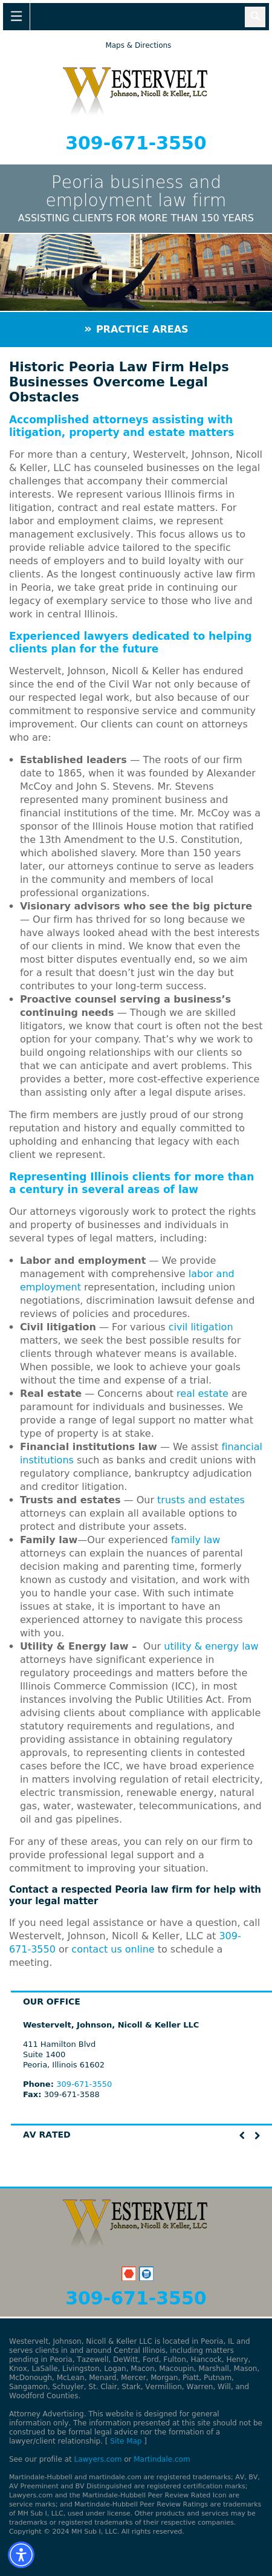 Westervelt Johnson Nicoll & Keller LLC - Peoria IL Lawyers